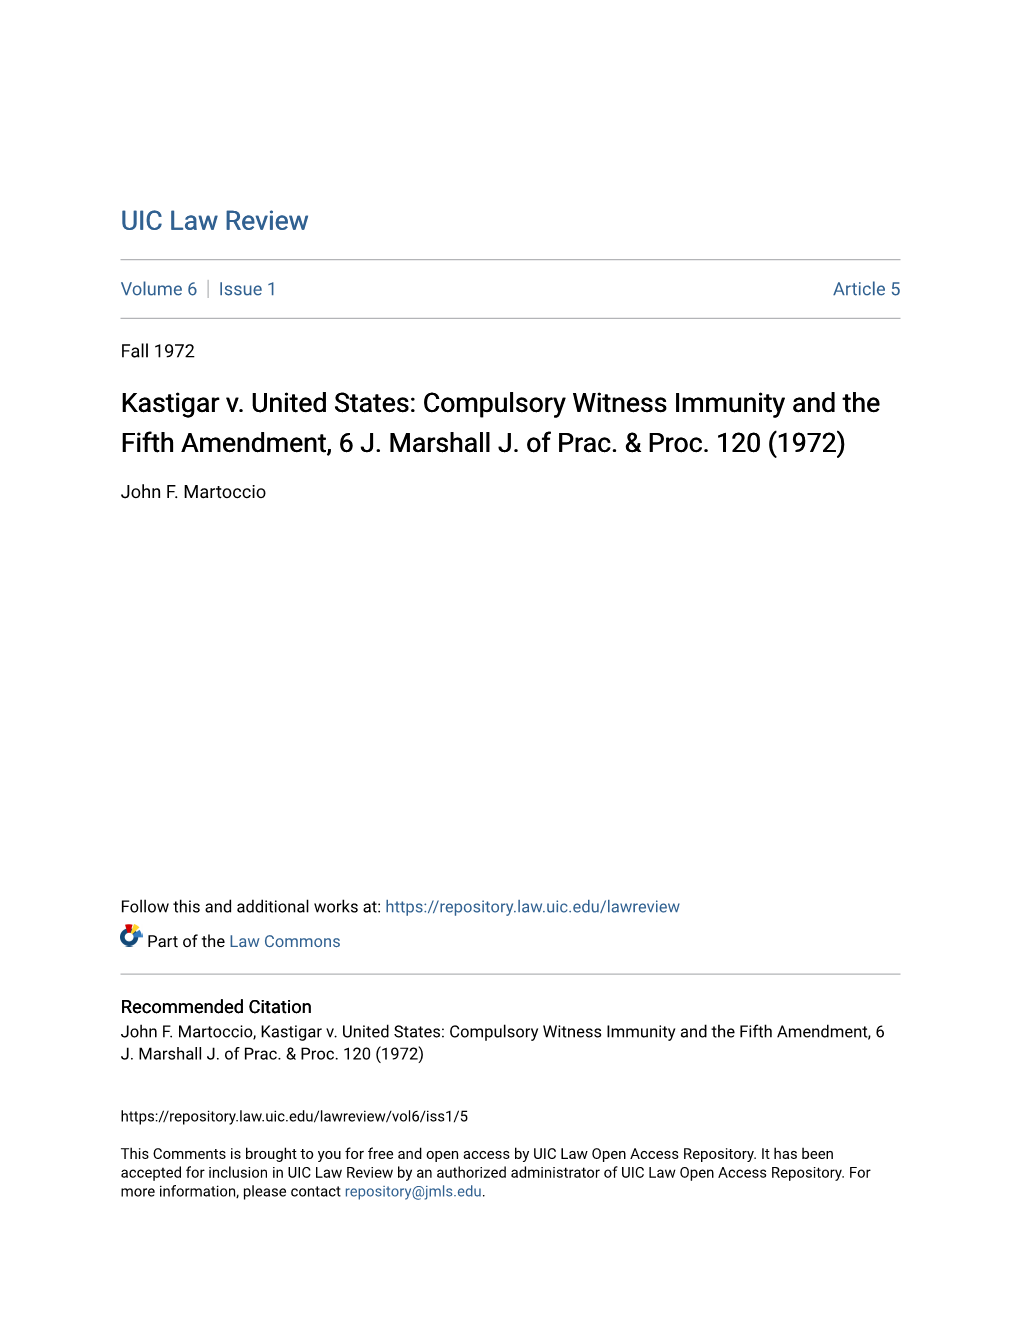 Kastigar V. United States: Compulsory Witness Immunity and the Fifth Amendment, 6 J